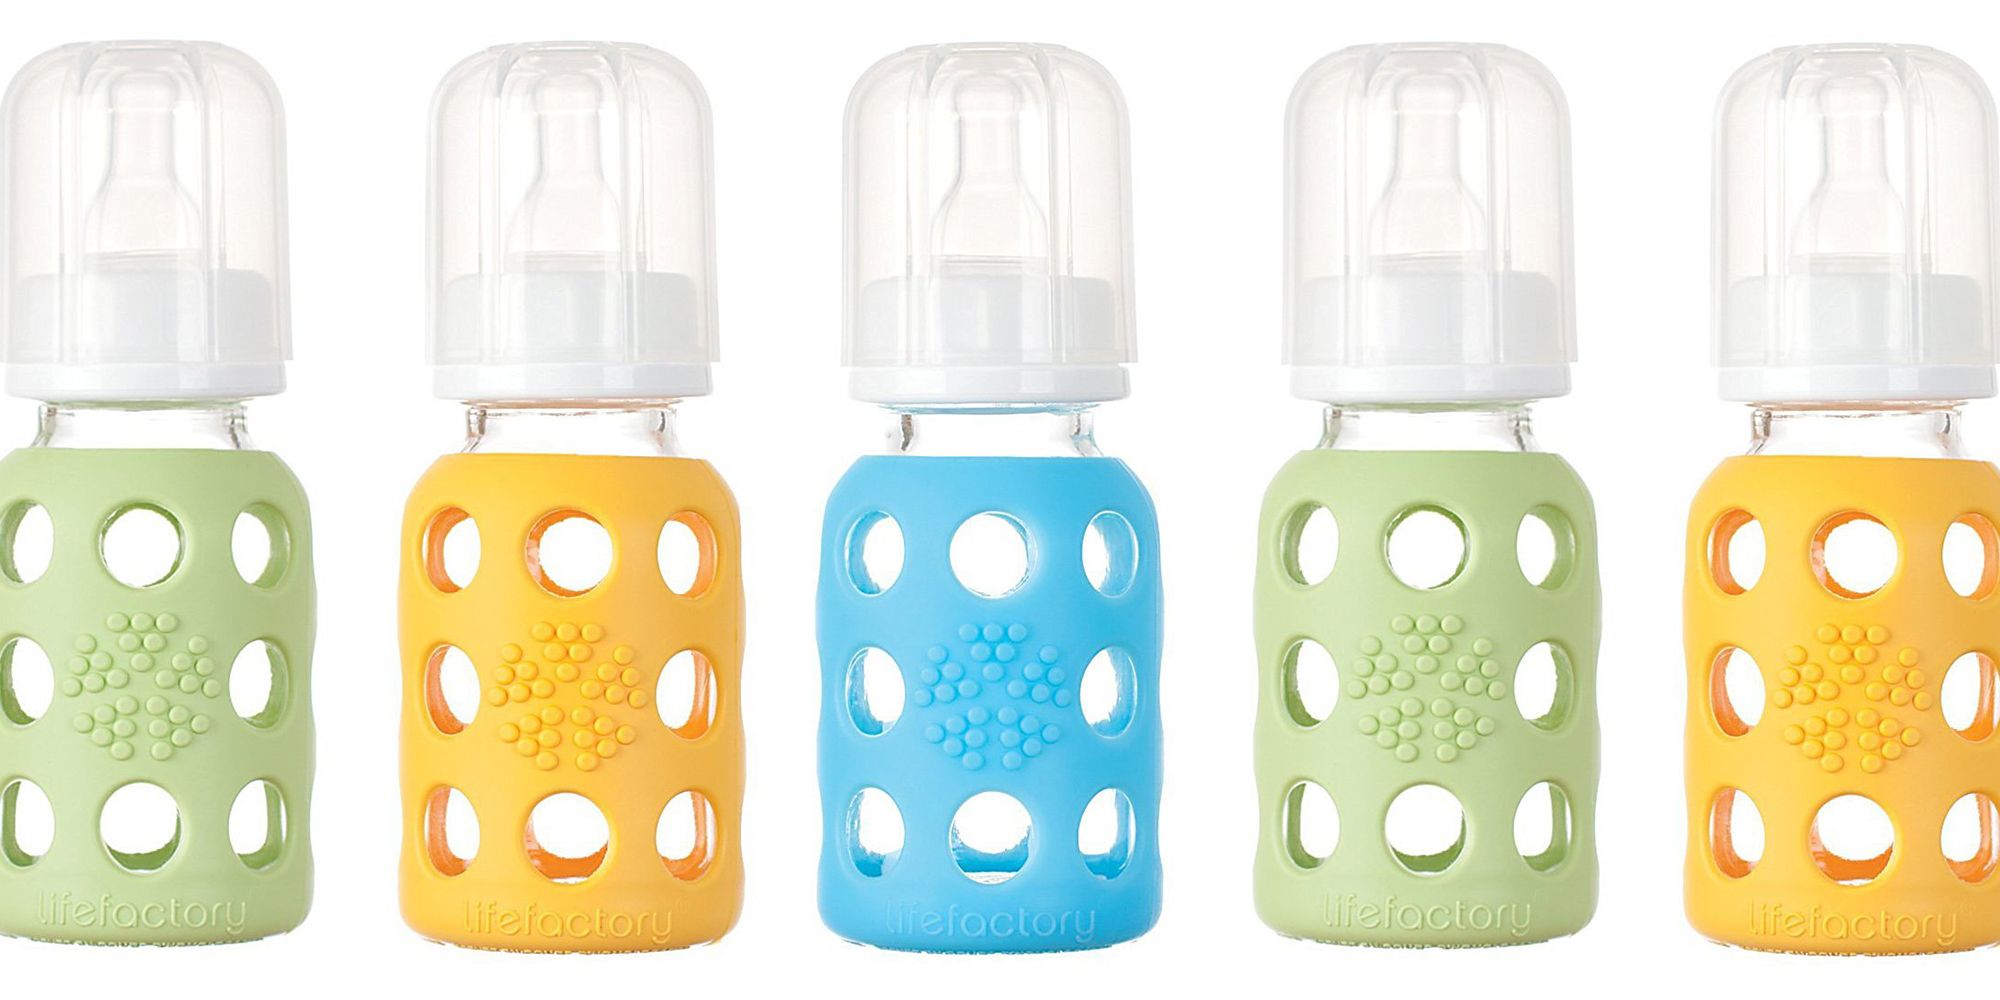  Medela Calma Bottle Nipple, Baby Bottle Teat for use with  Medela collection bottles, Made without BPA, Air-Vent System